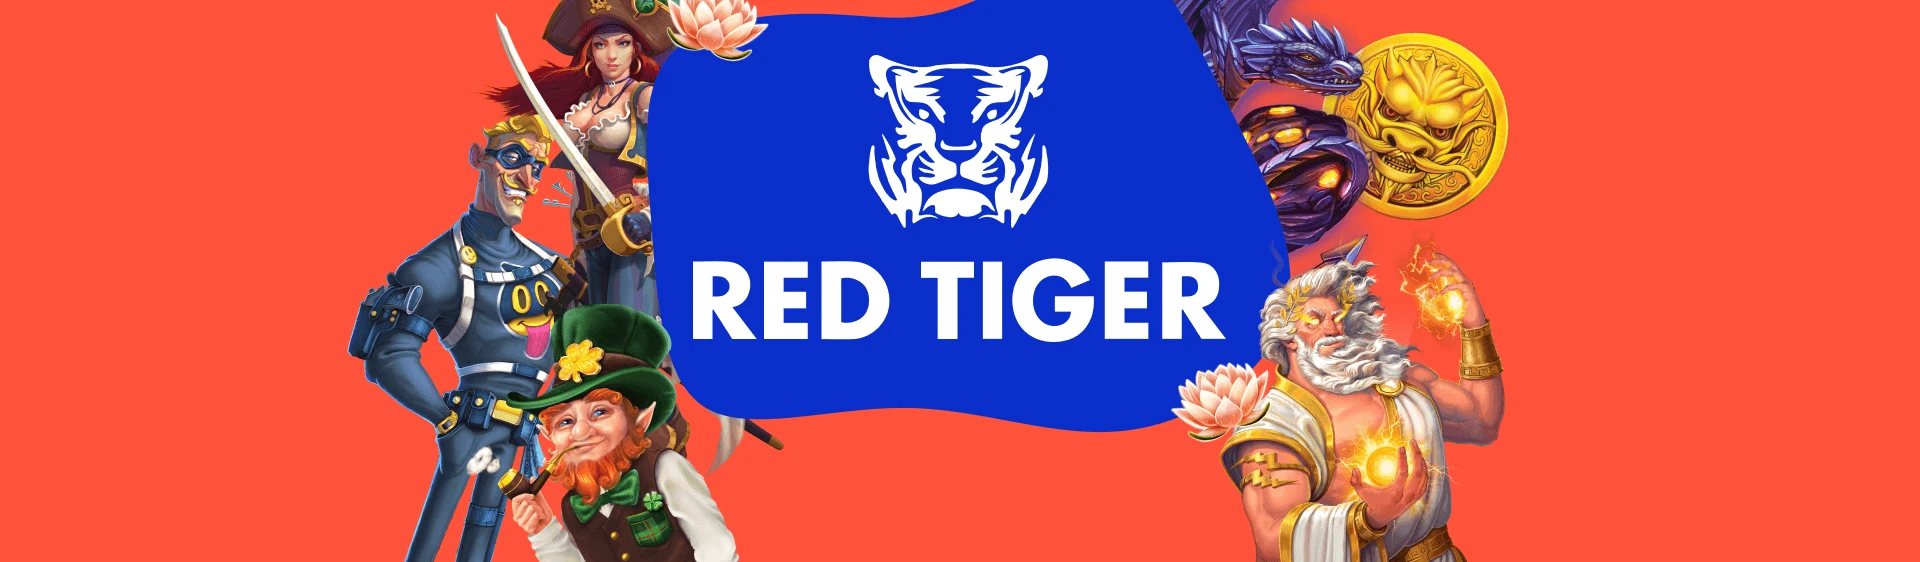 red tiger gaming jeux